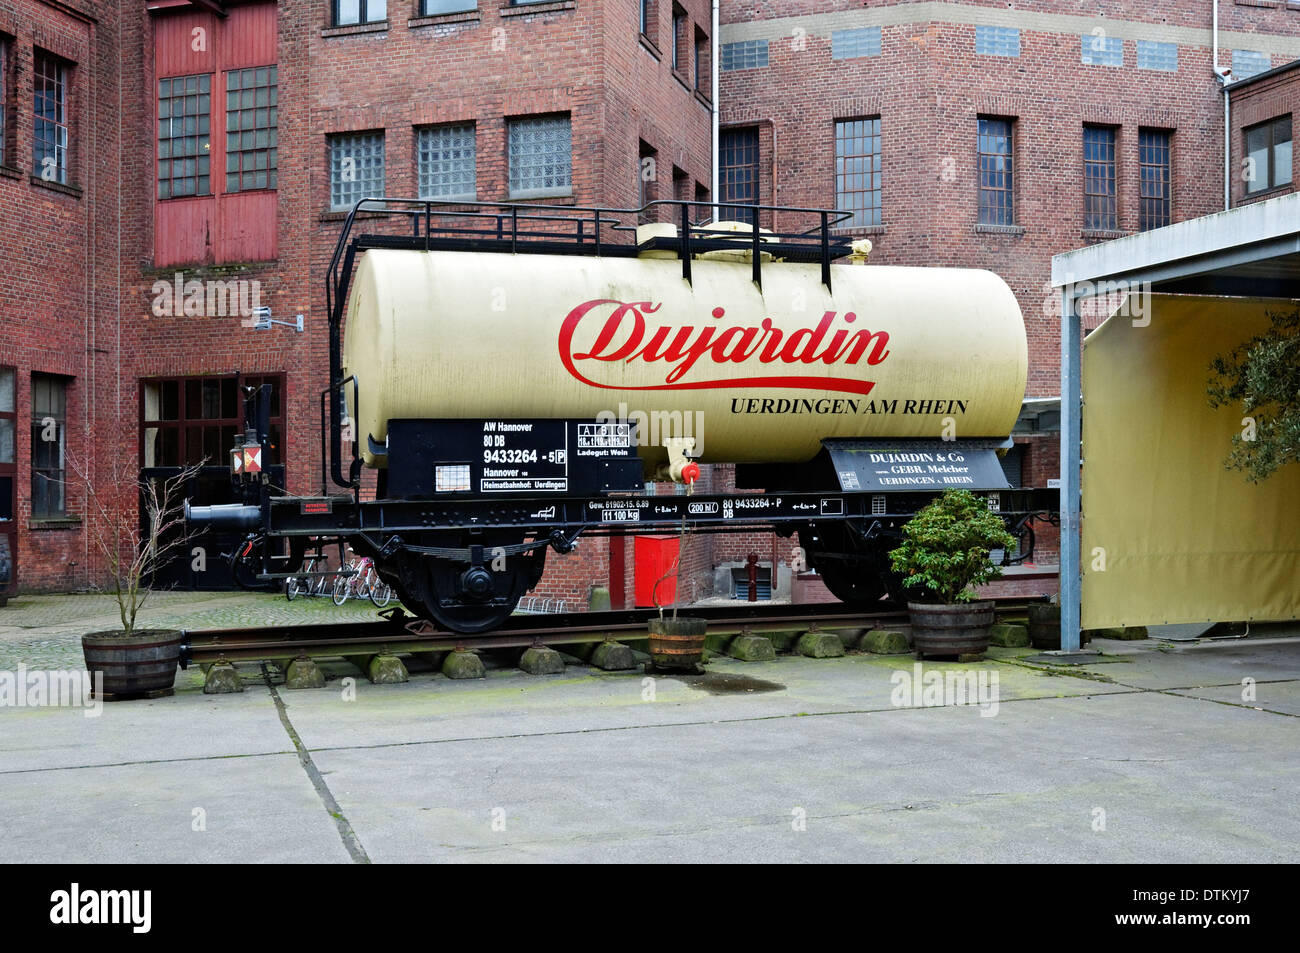 Railway truck formerly used to transport wine at Dujardin Museum, Krefeld Uerdingen, NRW. Germany Stock Photo